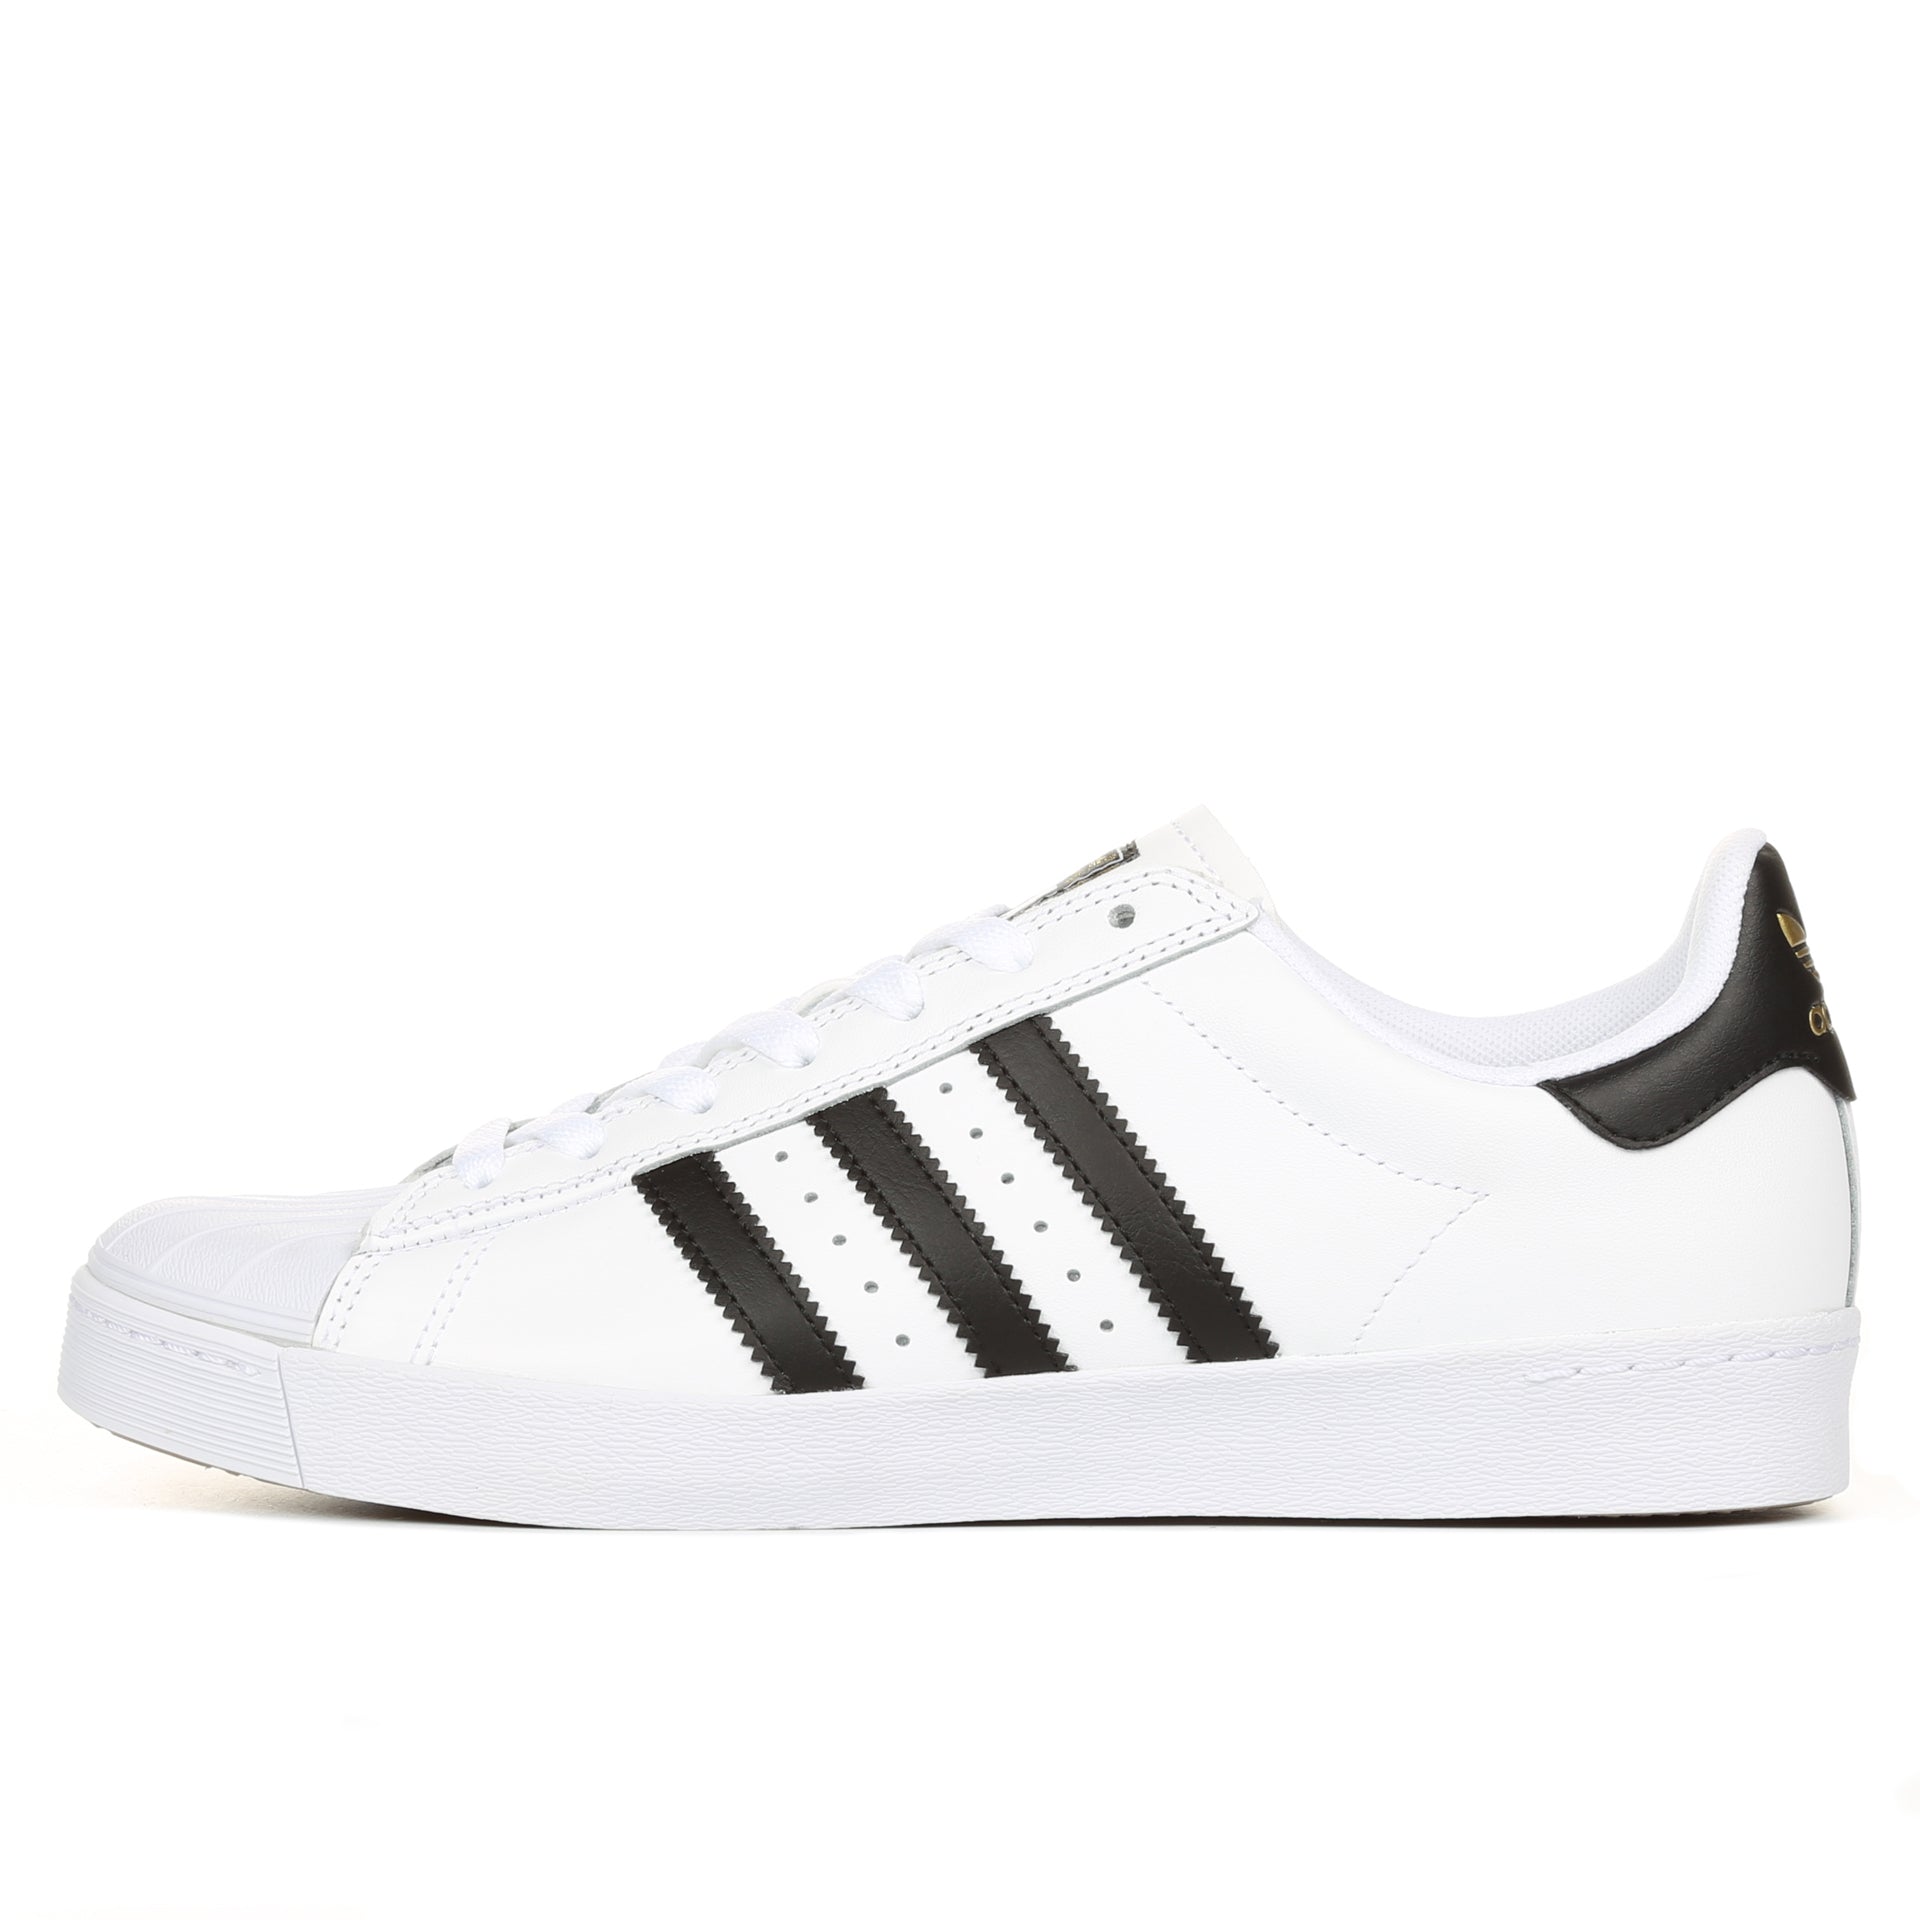 Adidas Superstar Vulc ADV - White/Core Black - New Star